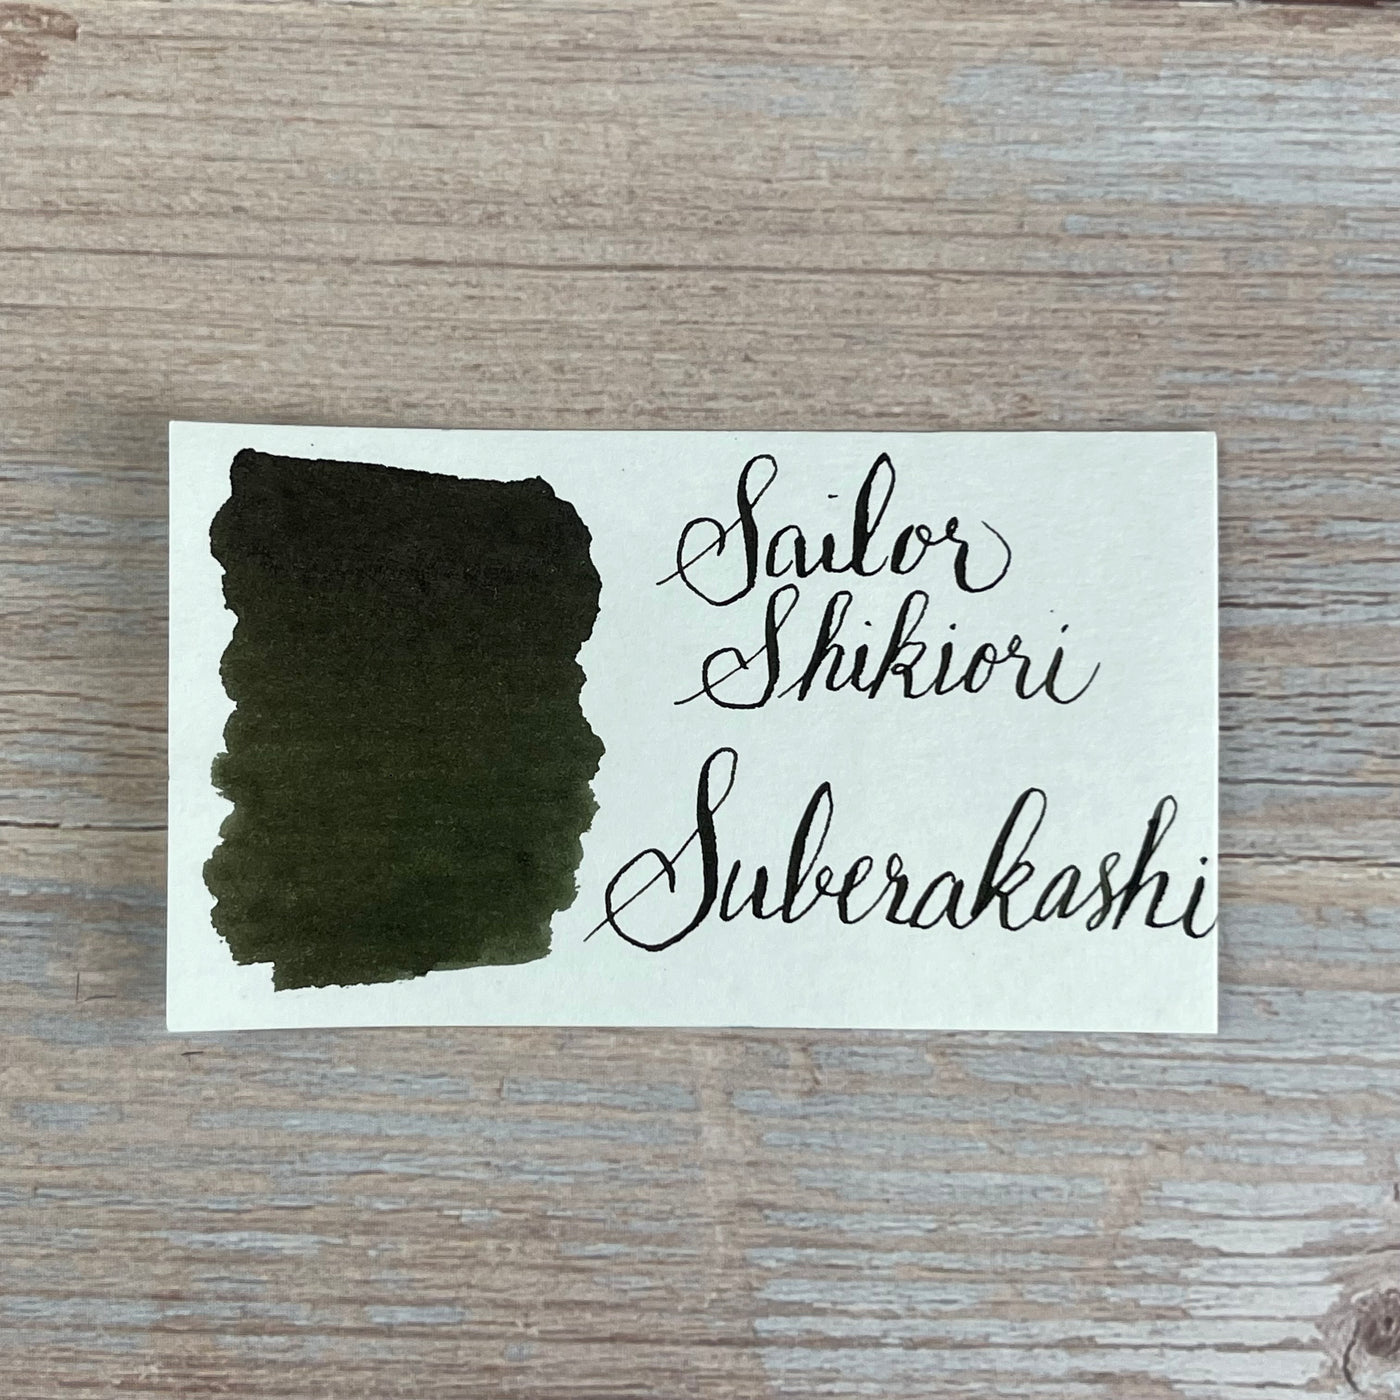 Sailor Shikiori Sube-Rakashi - 20ml Bottled Ink